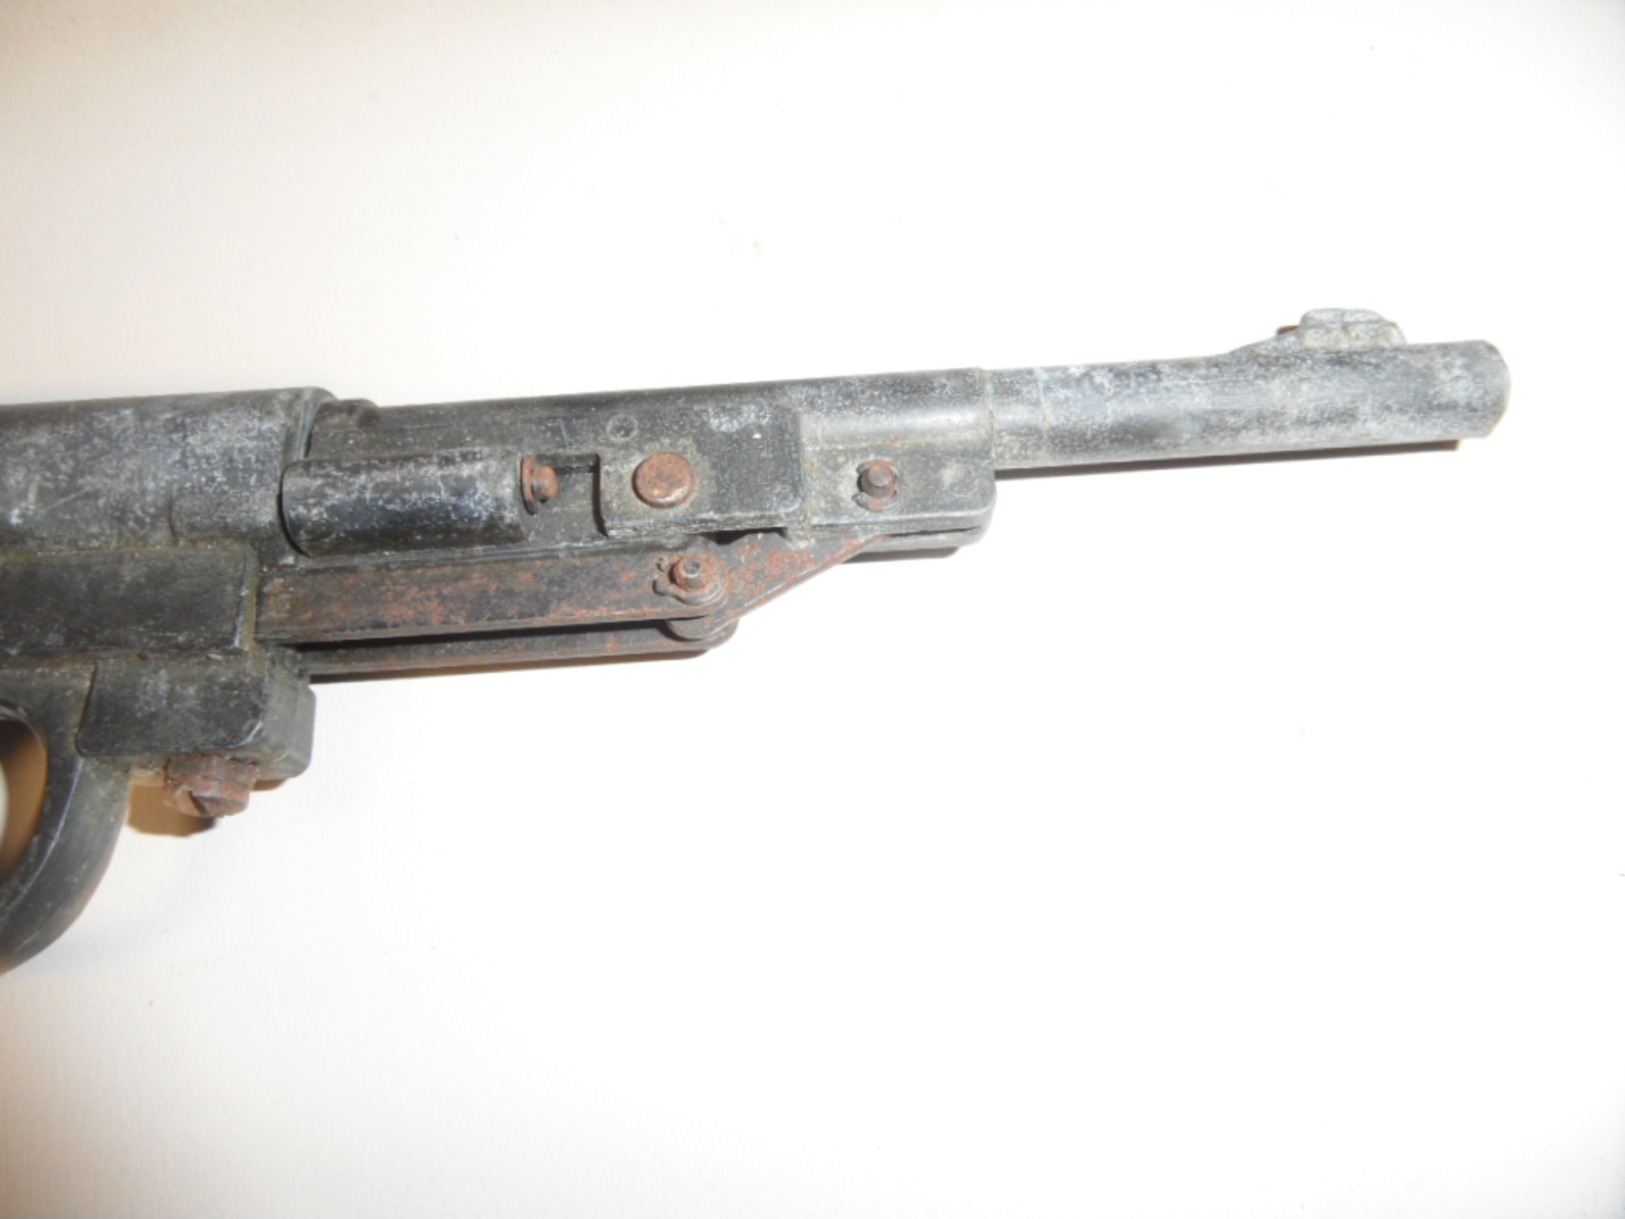 Pistolet a plomb 4,5 mm de marque "record" fabrication allemande.